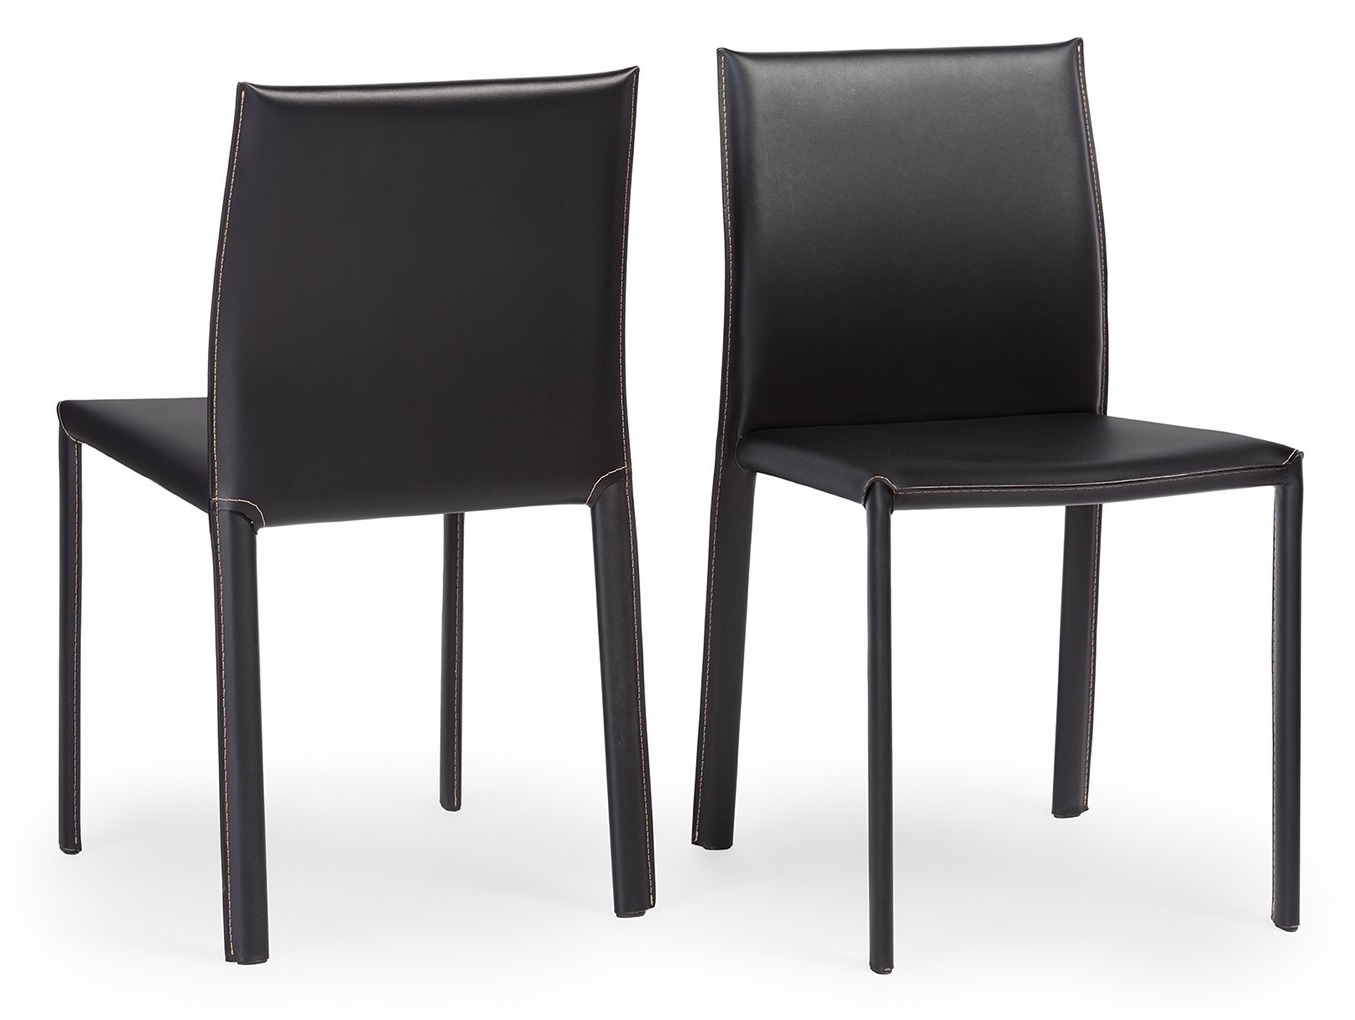 burridge-chair-in-black-leather-finish.jpg